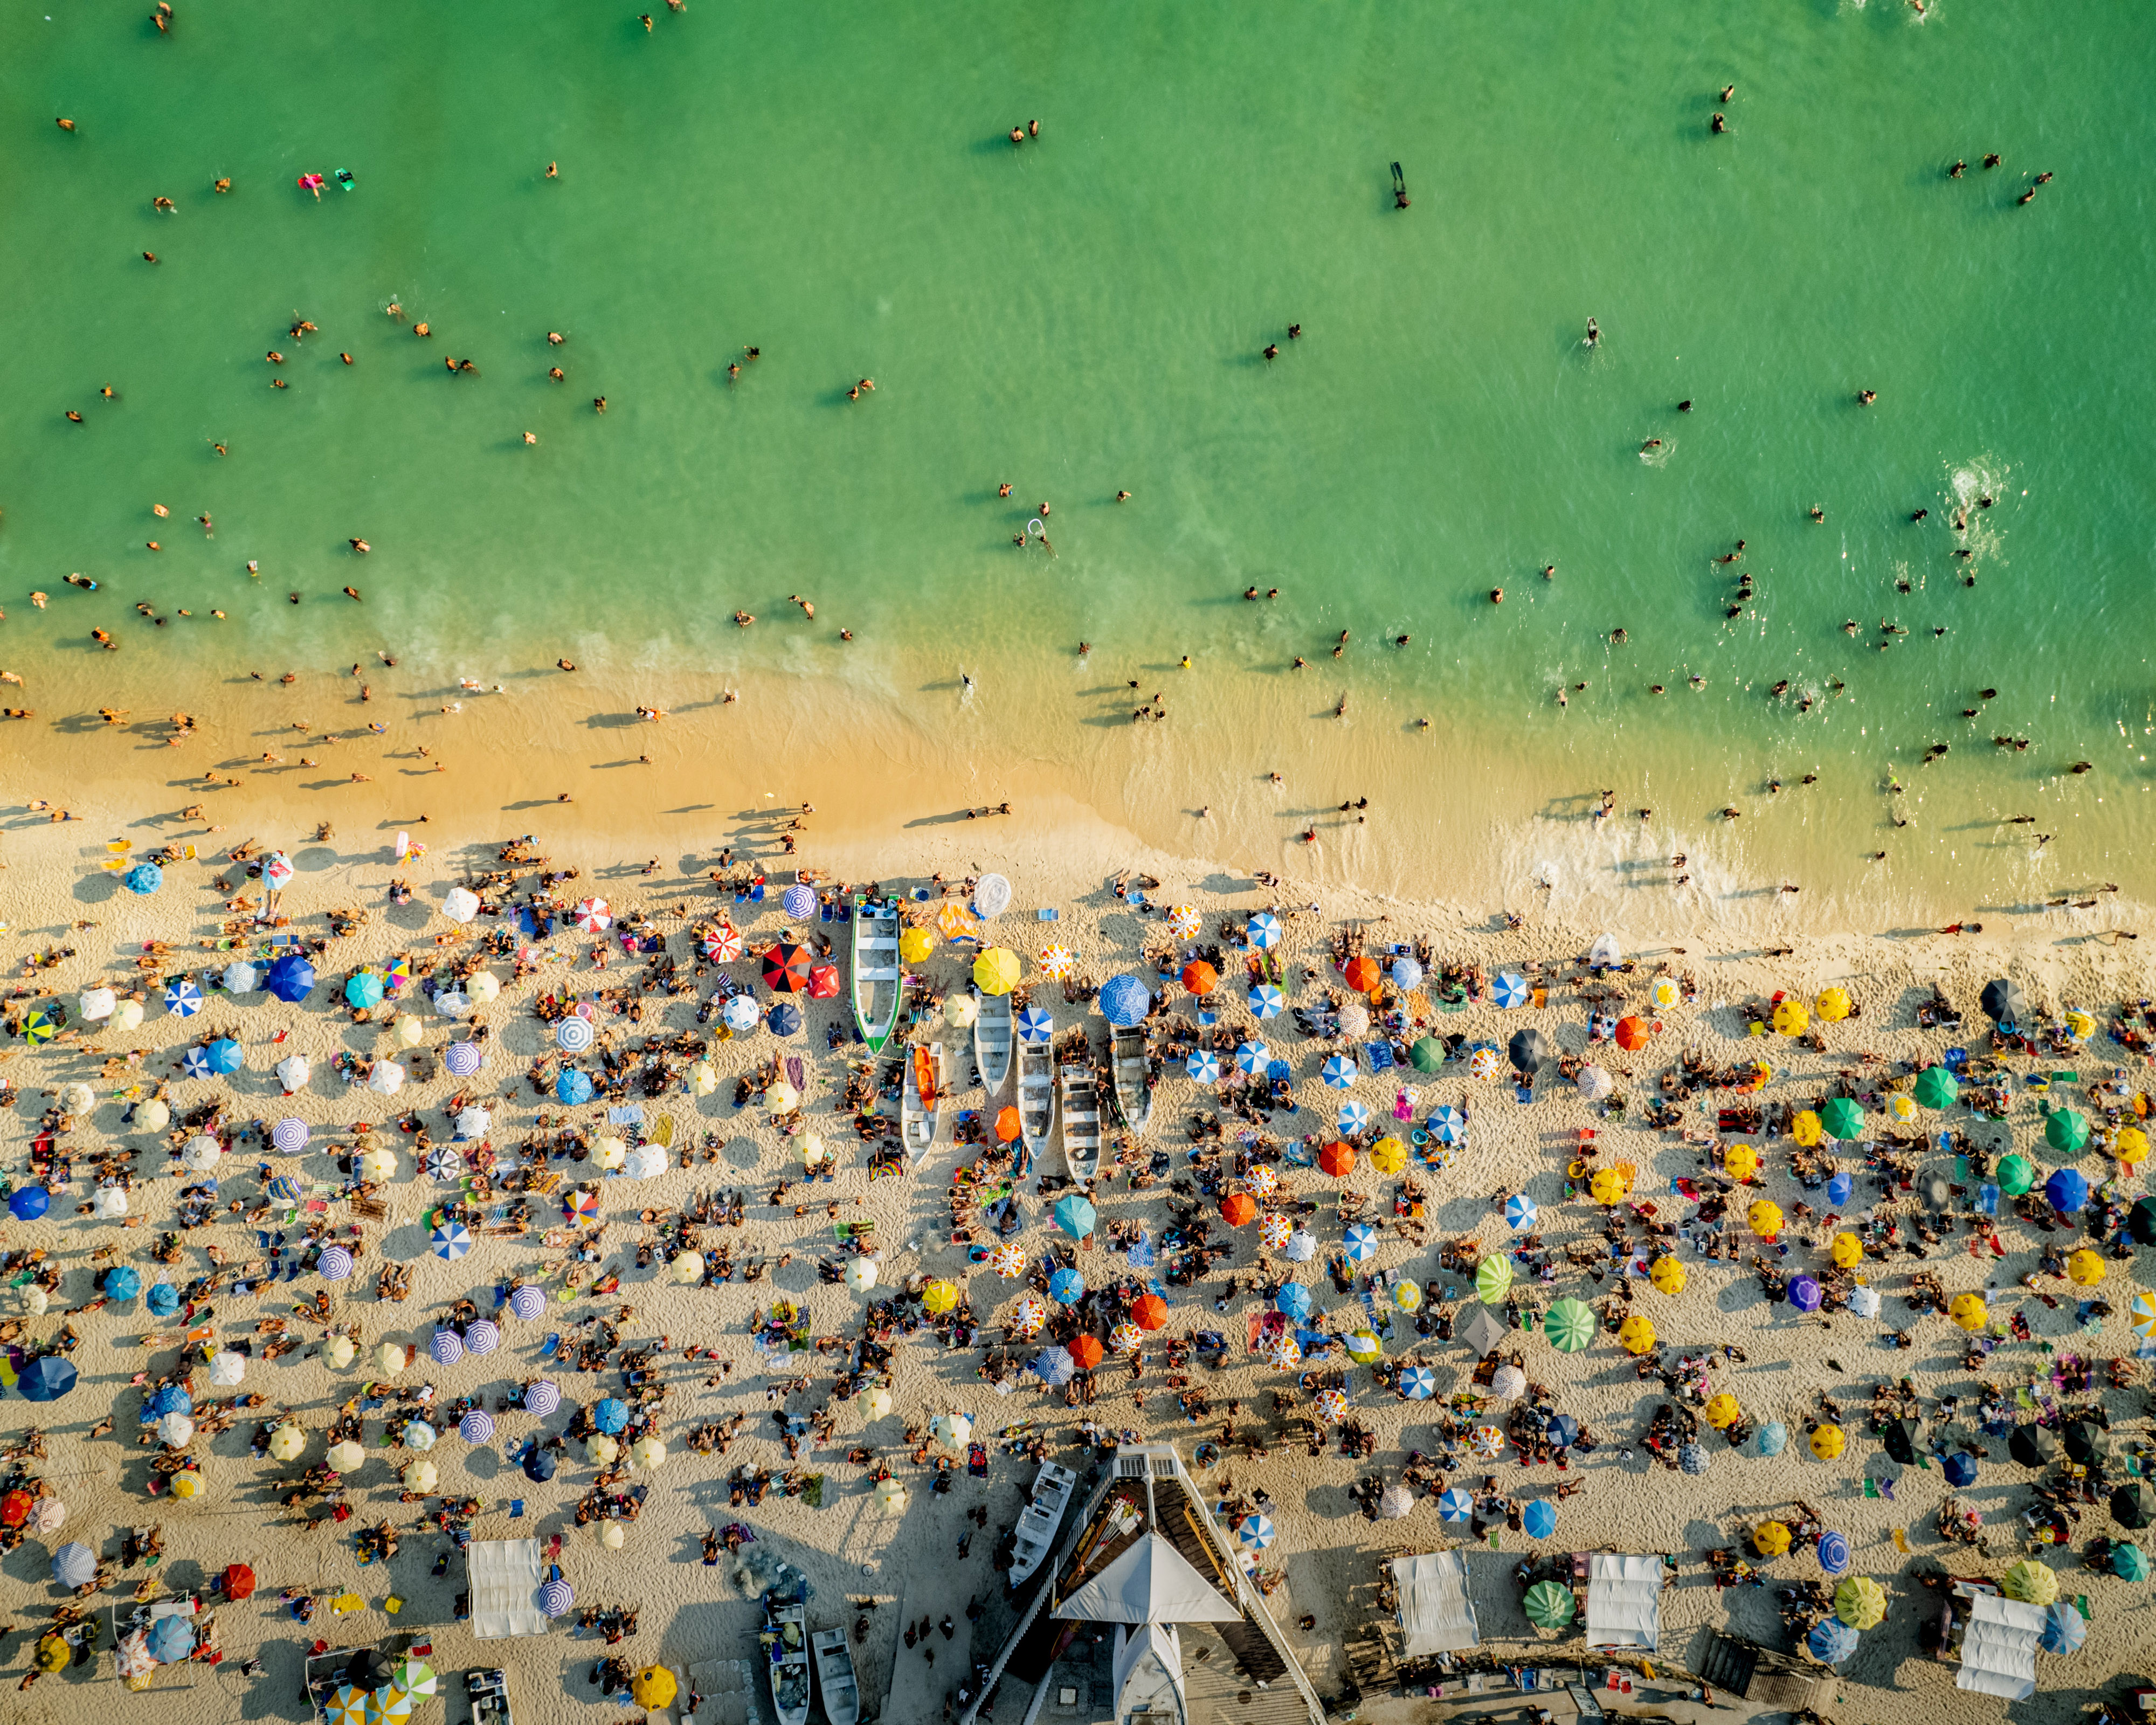 'Post lockdown beach'. Praia do Pontal, at Recreio dos Bandeirantes in Rio de Janeiro on the first day after the beaches lockdown. © Marcelo Paulo Silva/TNC Photo Contest